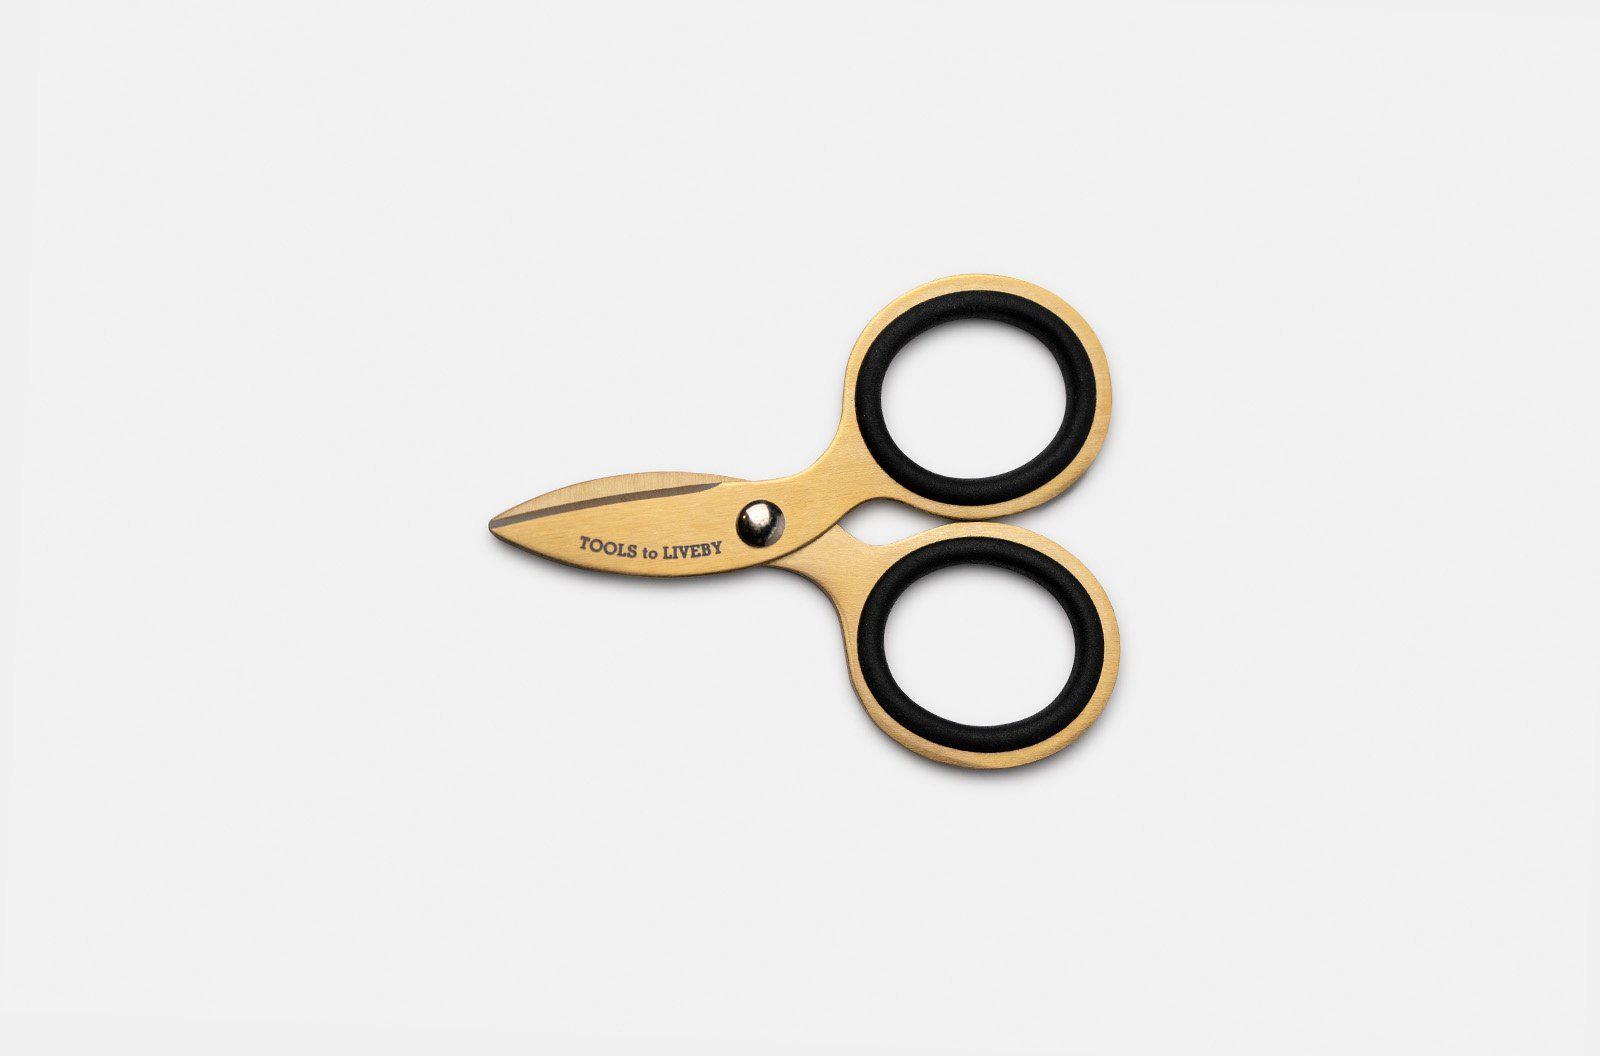 Scissors for life - electrician scissors for the win : r/BuyItForLife